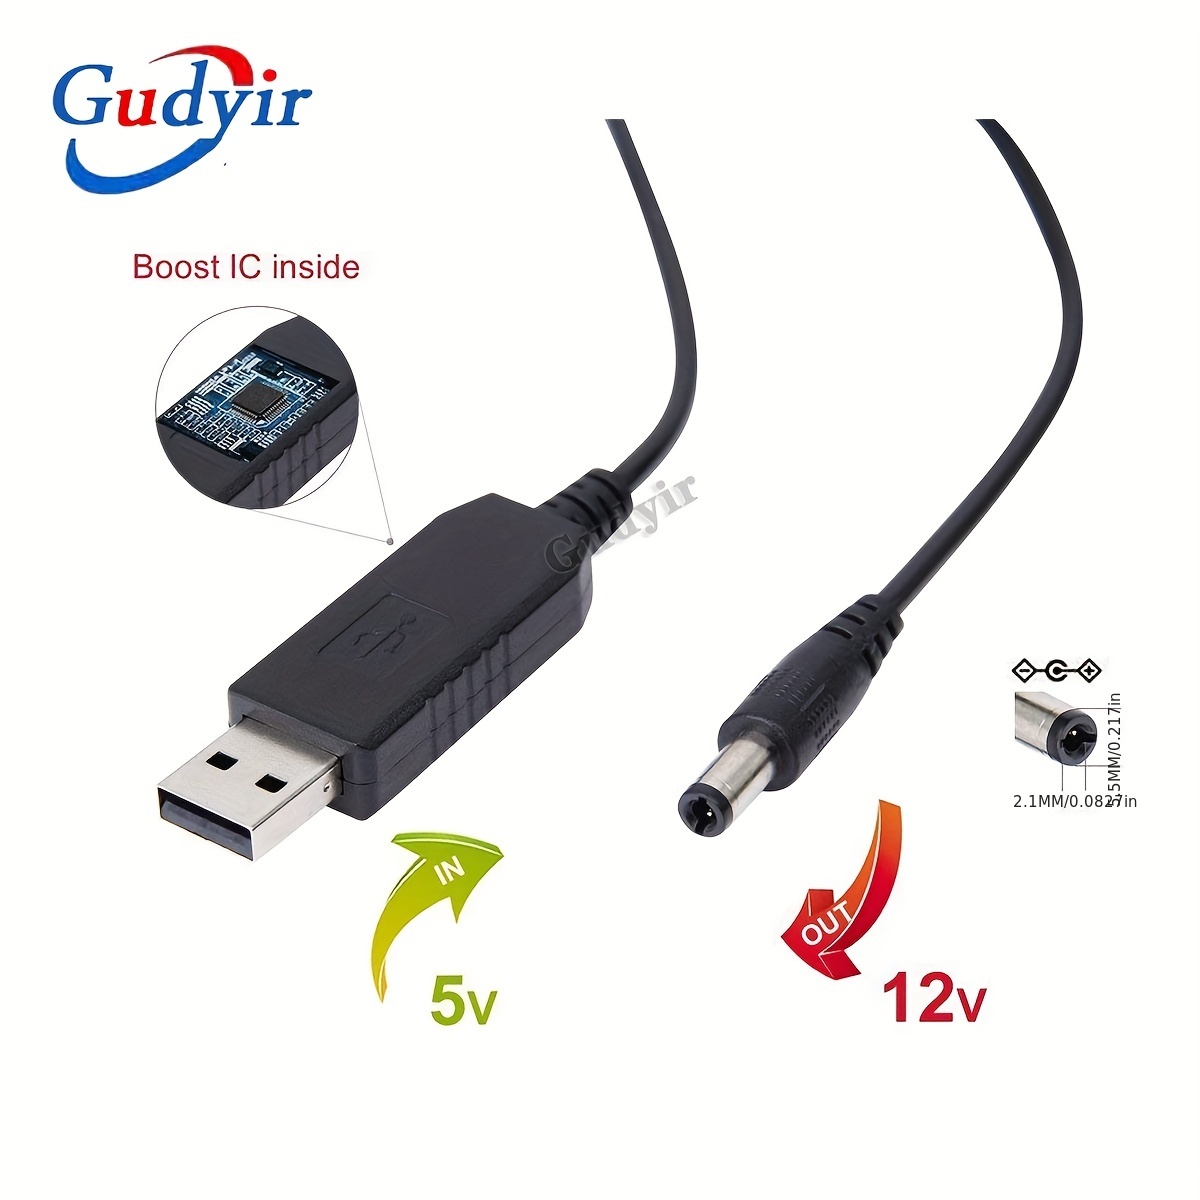 Spannungsumwandler, USB an 9V, 5V an 12V Steigern Sie das USB-Kabel 5V  Boost auf 9V 12V Spannungswandler Step-up Spannungswandler Transformator  mit